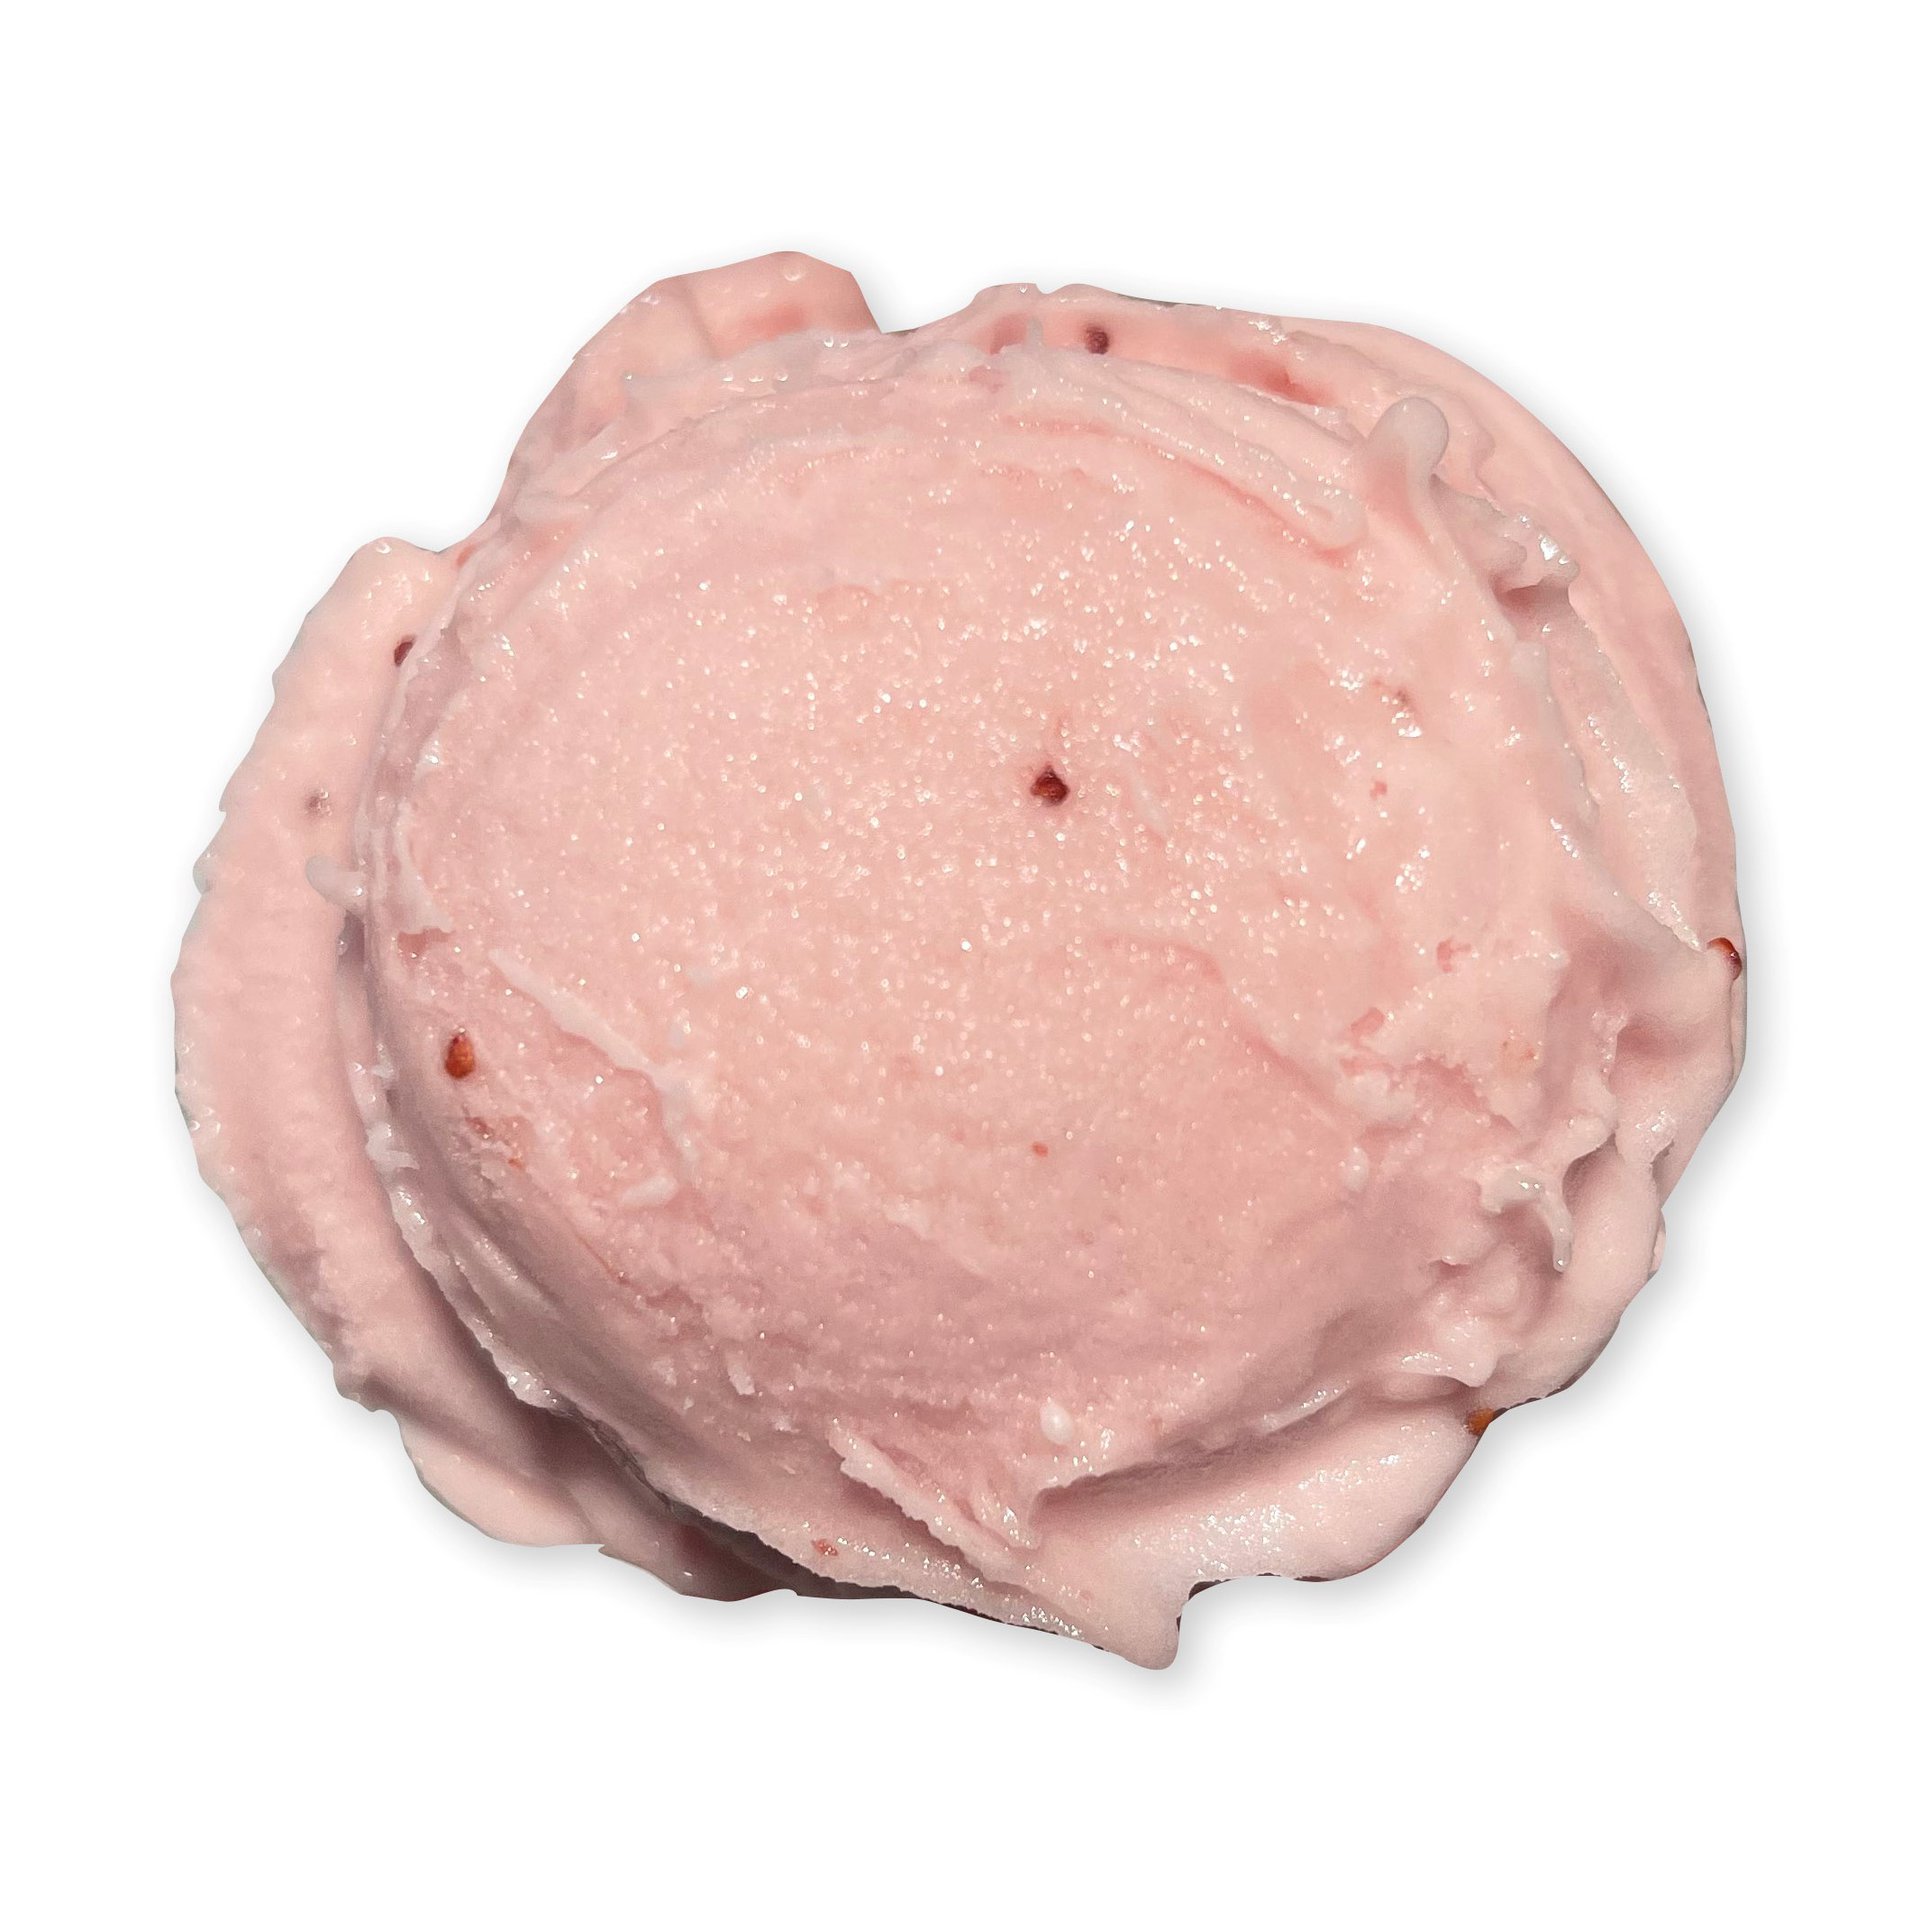 Strawberry Hibiscus Italian Ice - Chocolate Shoppe Ice Cream